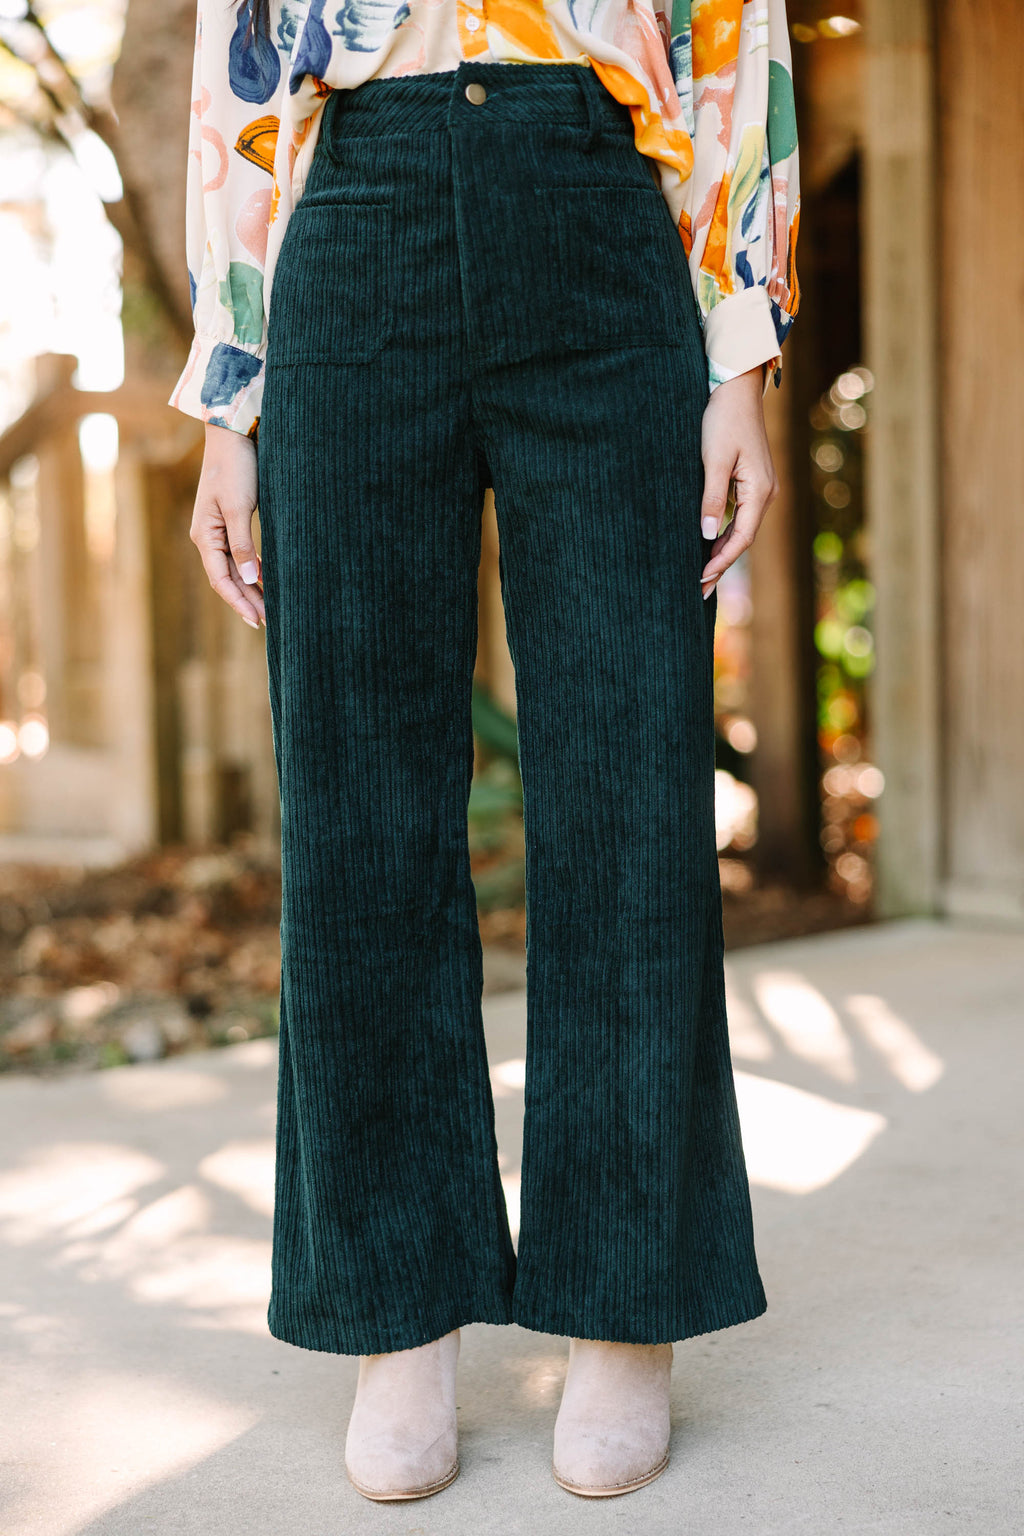 Womens Green Corduroy Pants - Shop on Pinterest